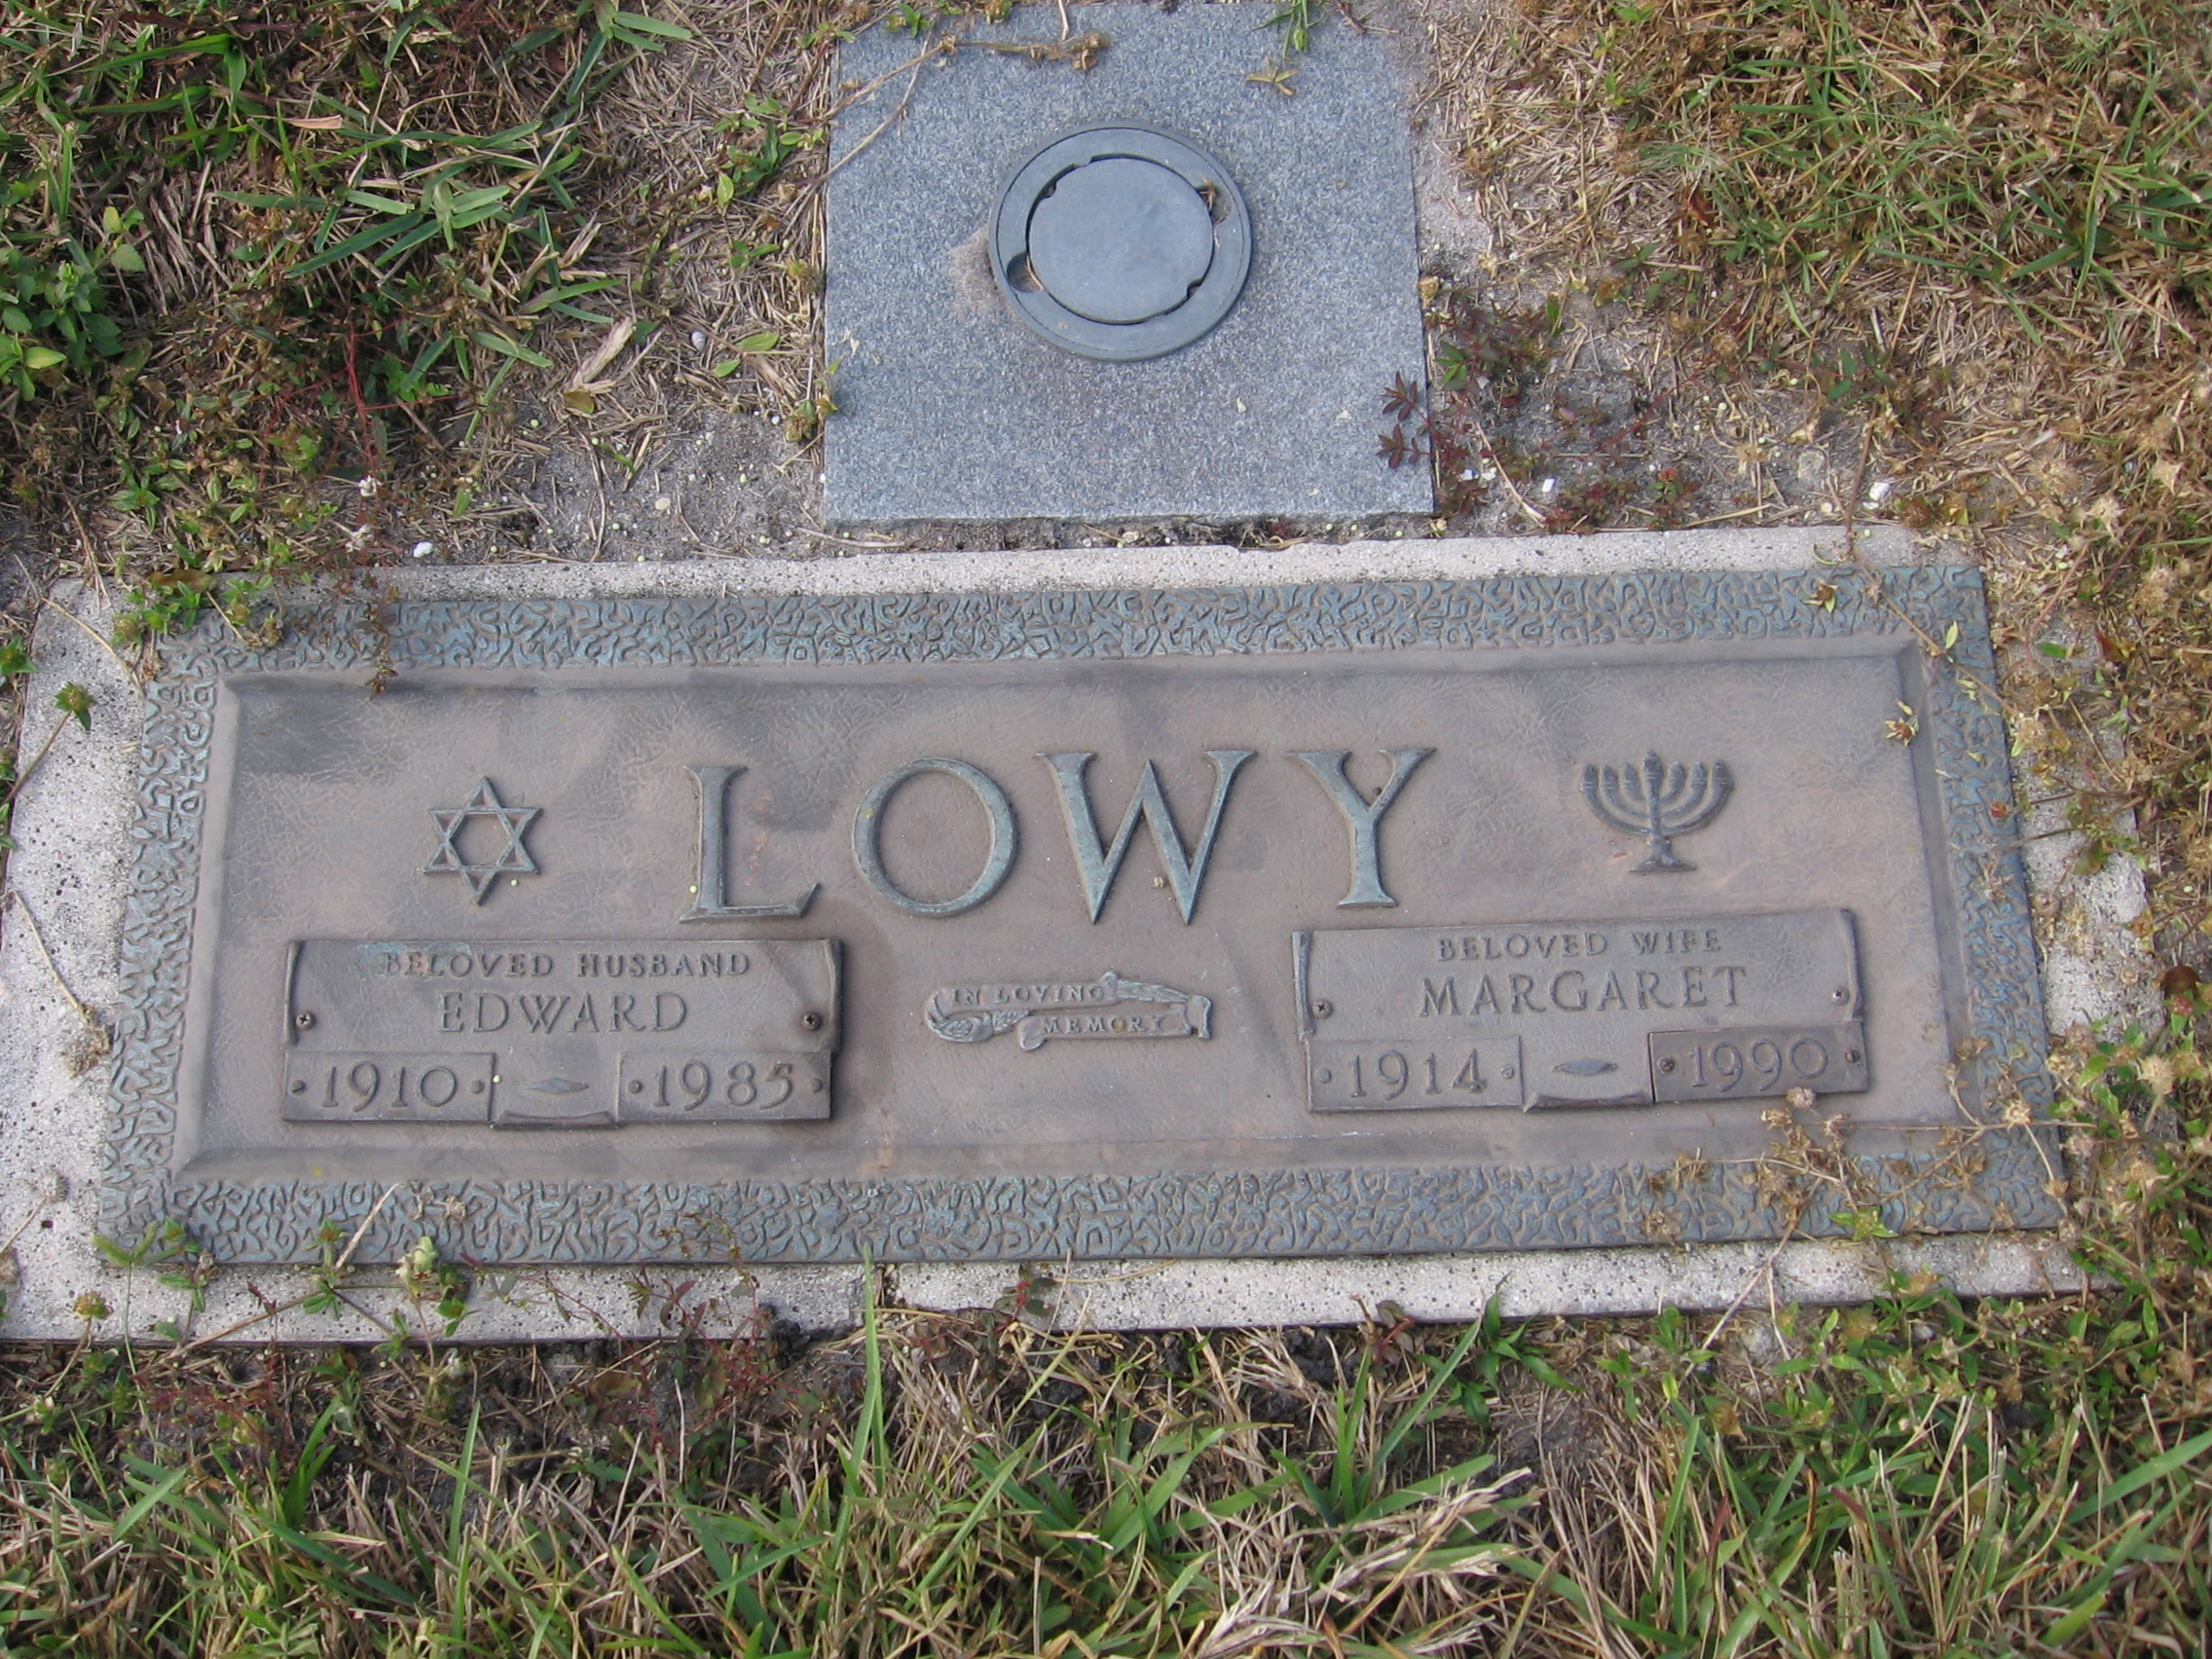 Edward Lowy